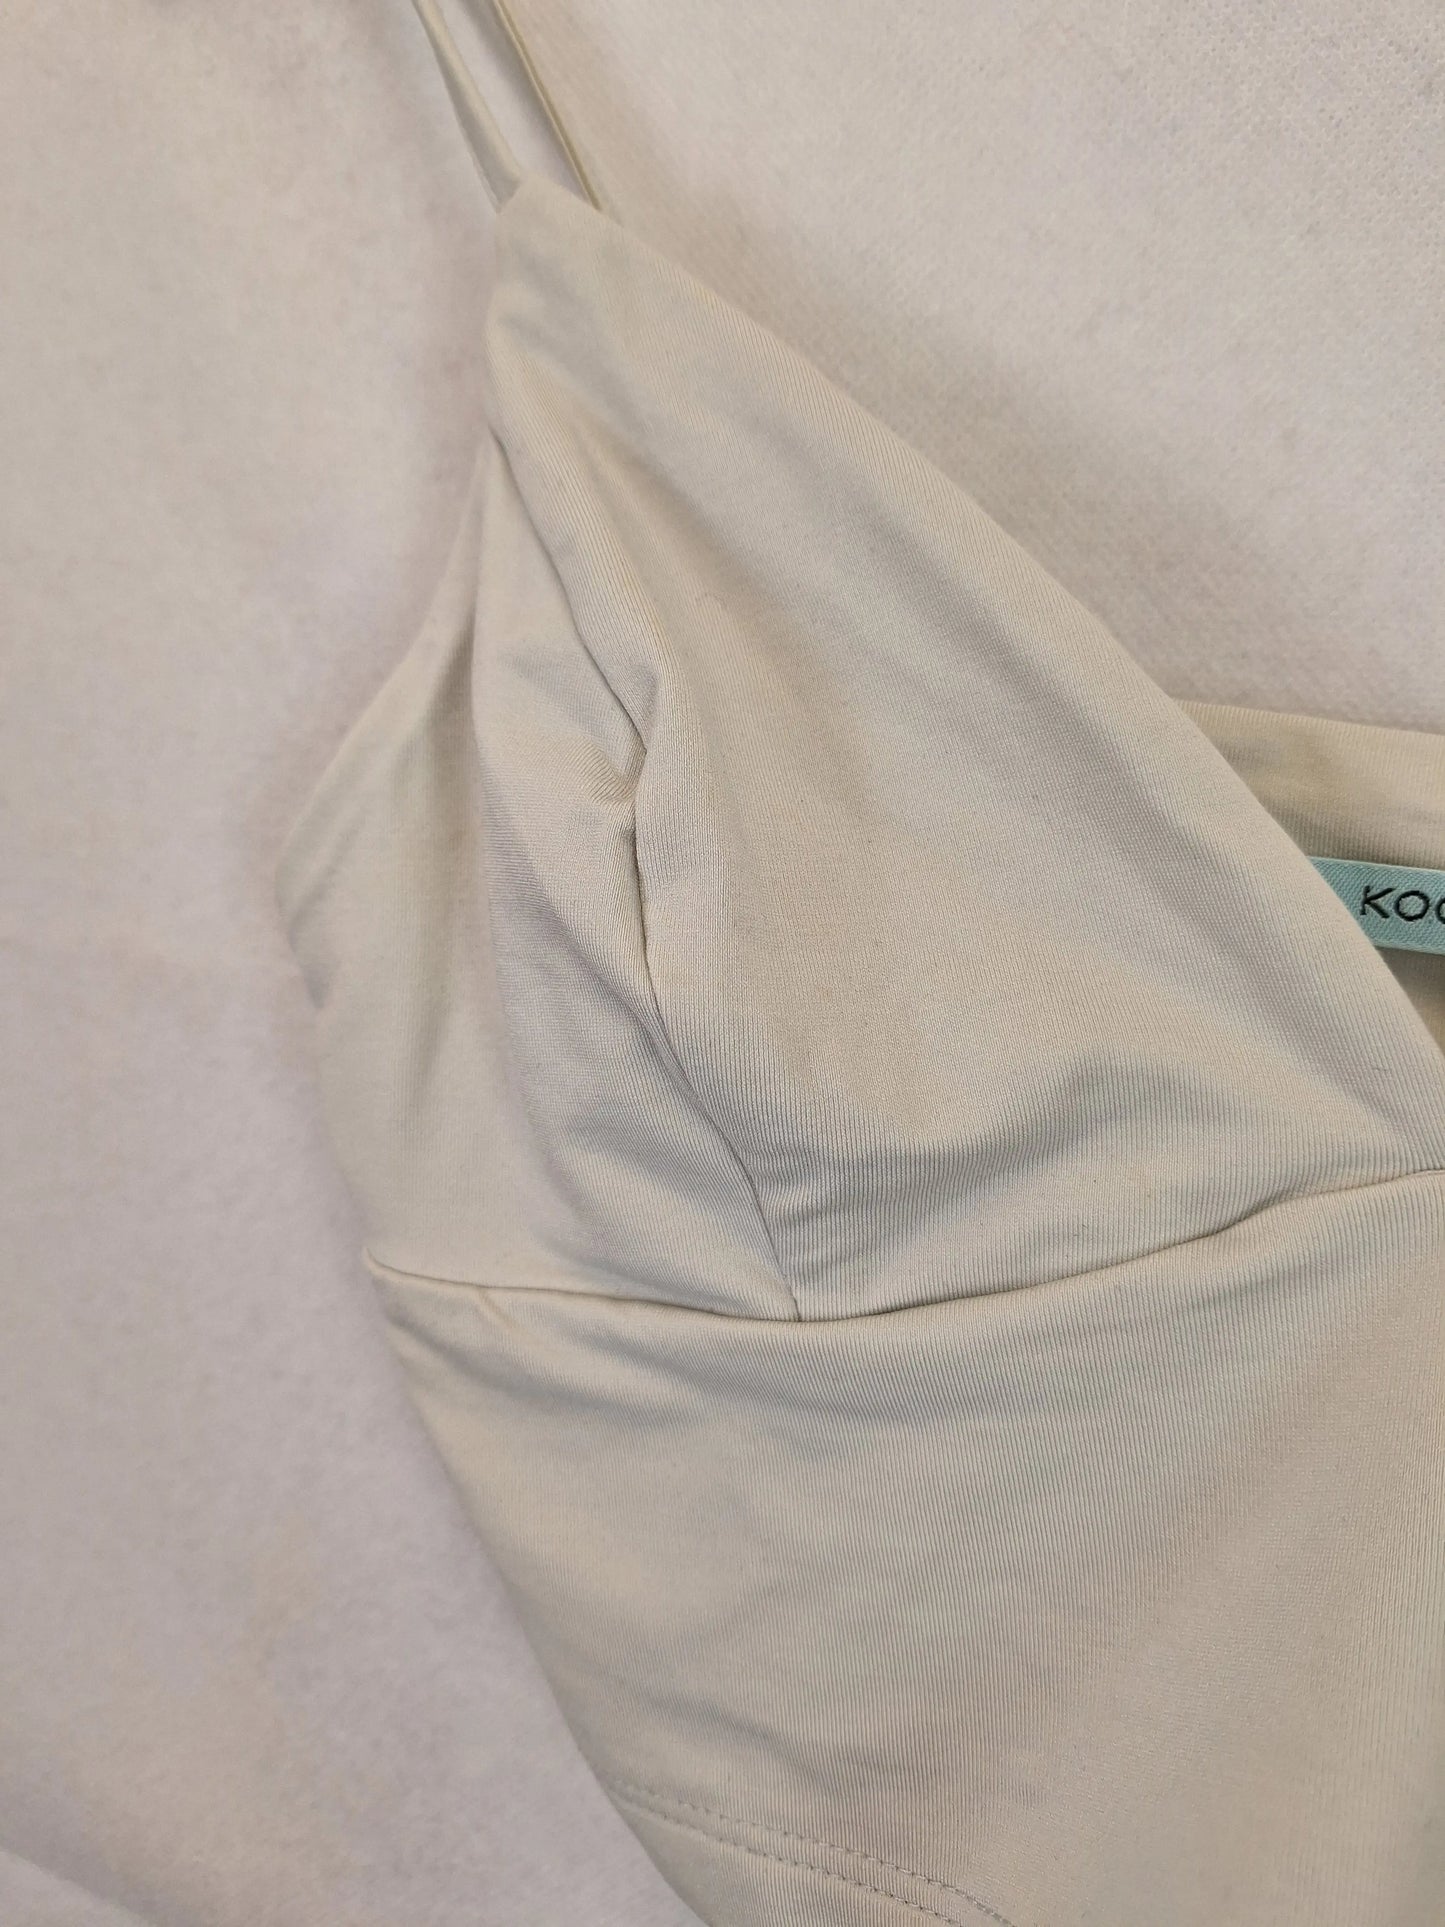 Kookai Grey Staple Bralette Top Size 10 by SwapUp-Online Second Hand Store-Online Thrift Store